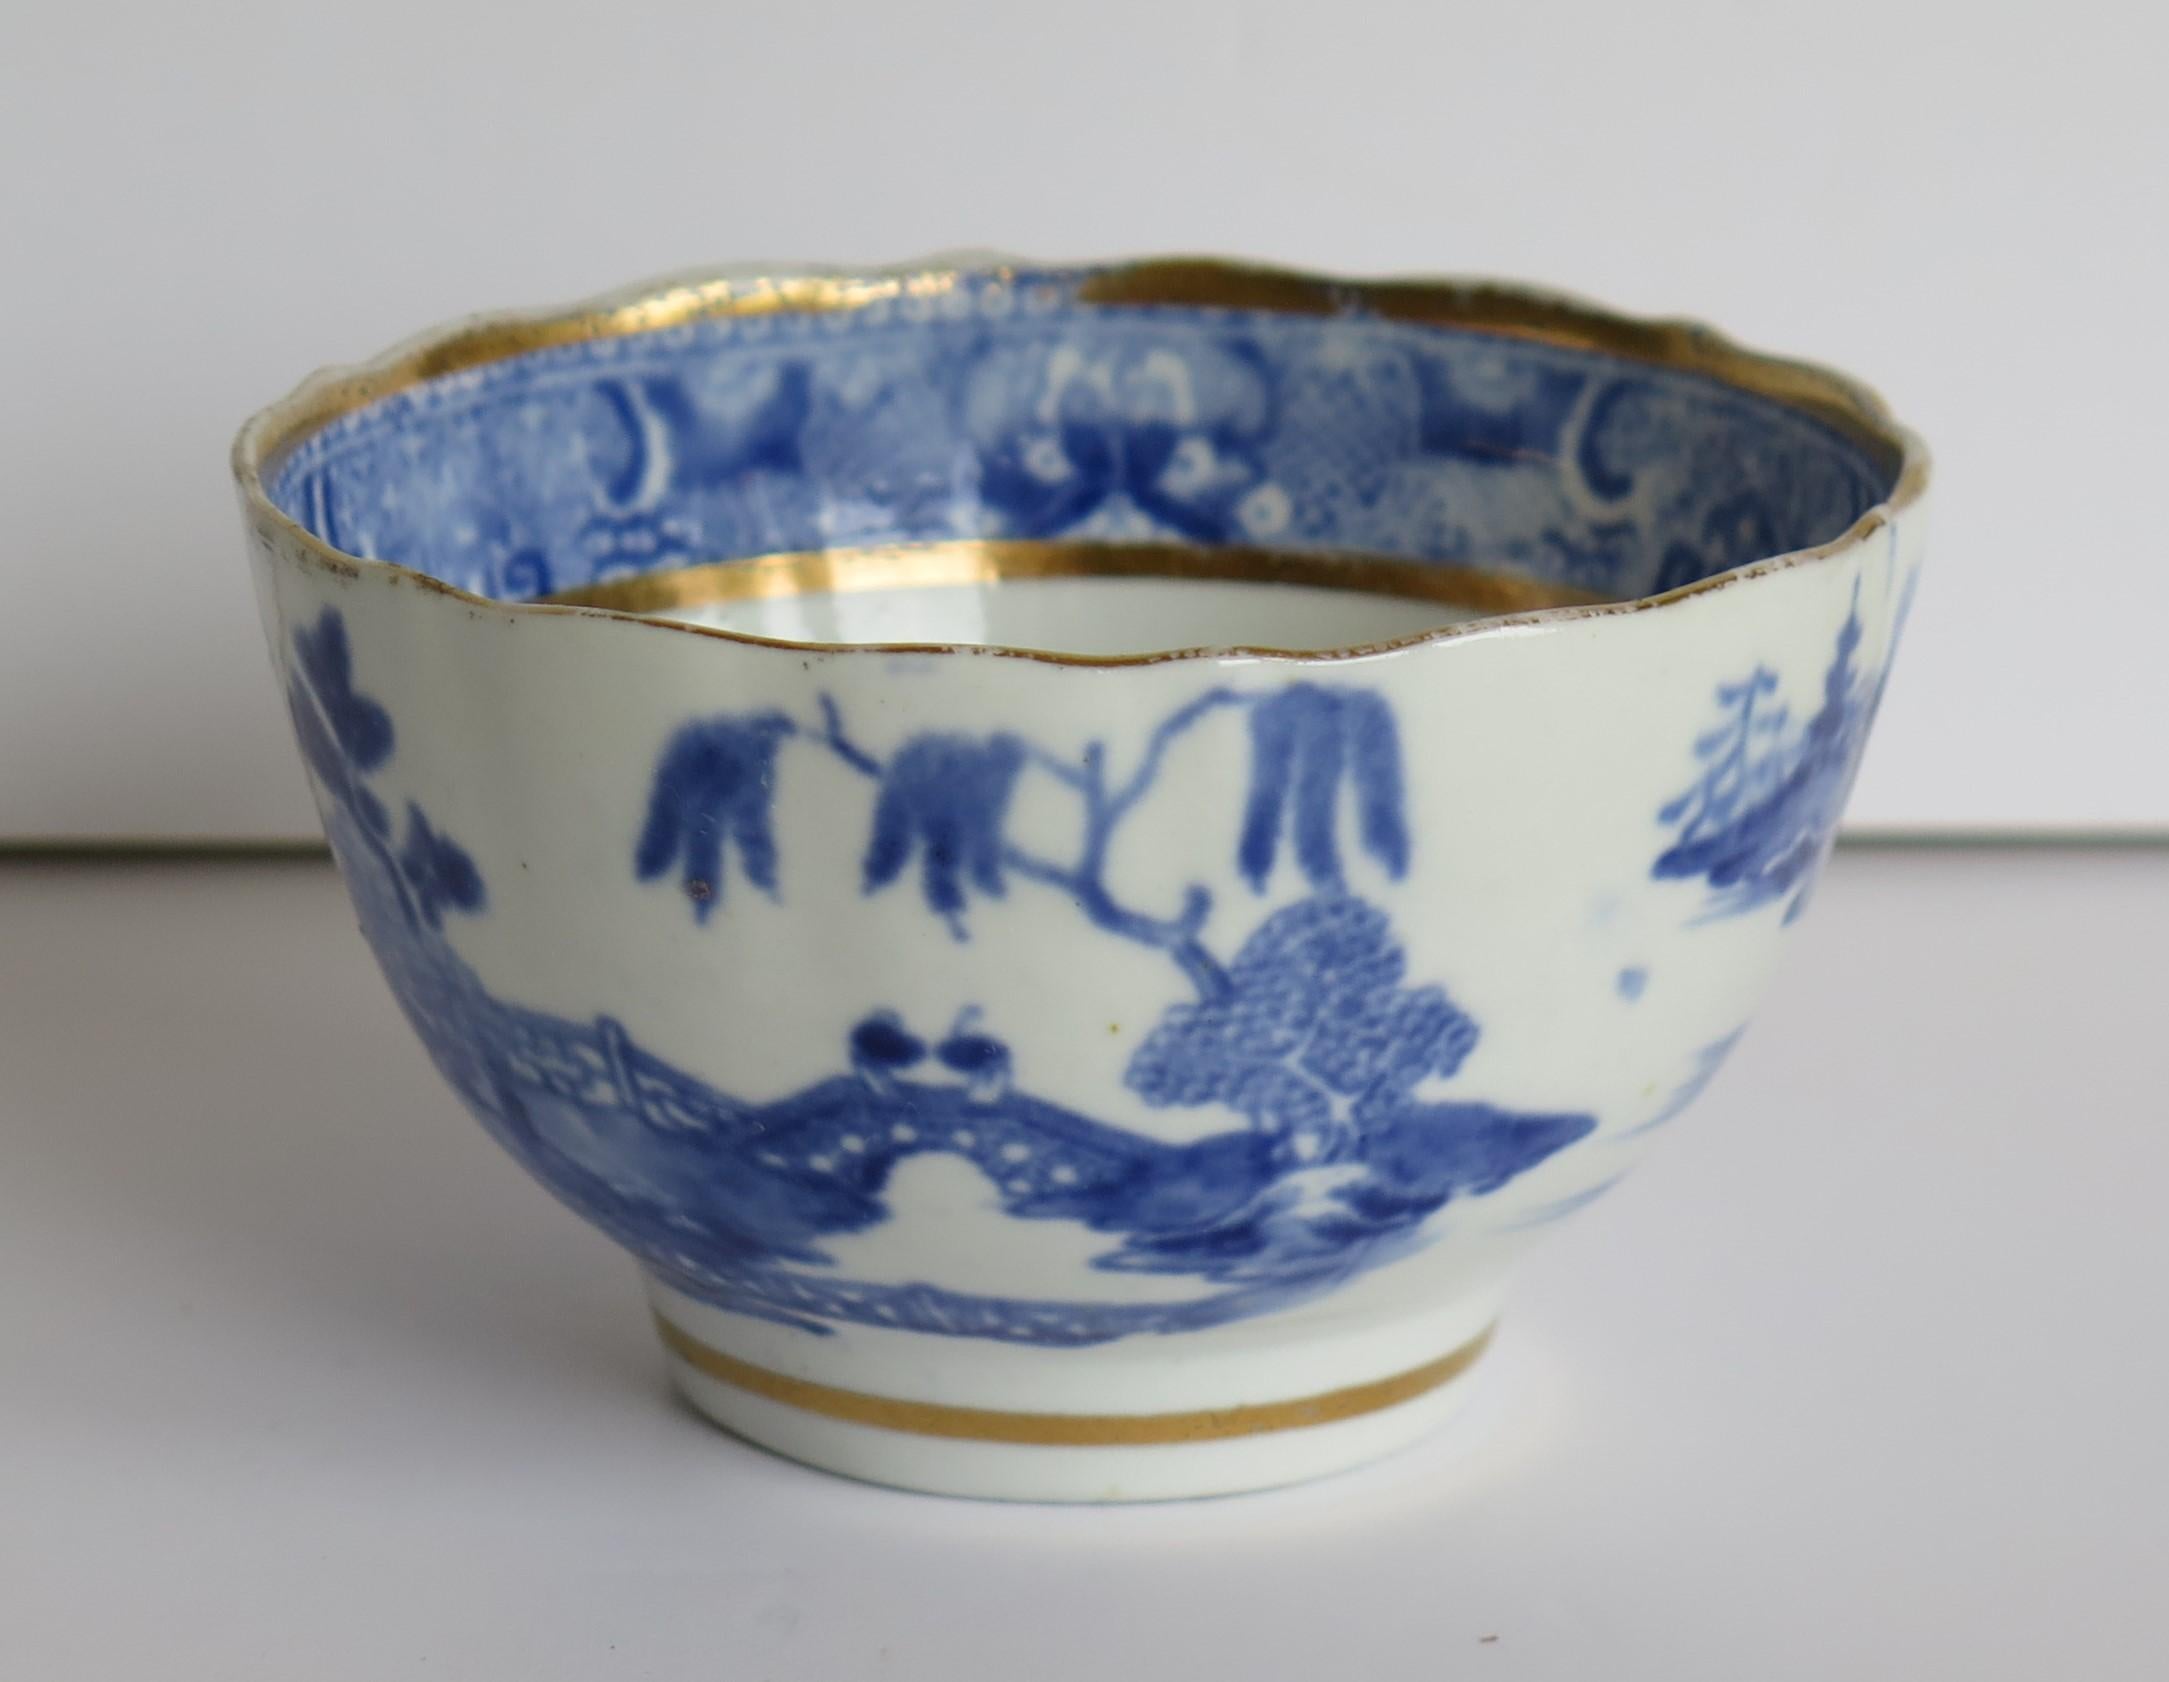 Miles Mason Porcelain Bowl Blue and White Pagoda Pattern, English, circa 1805 1